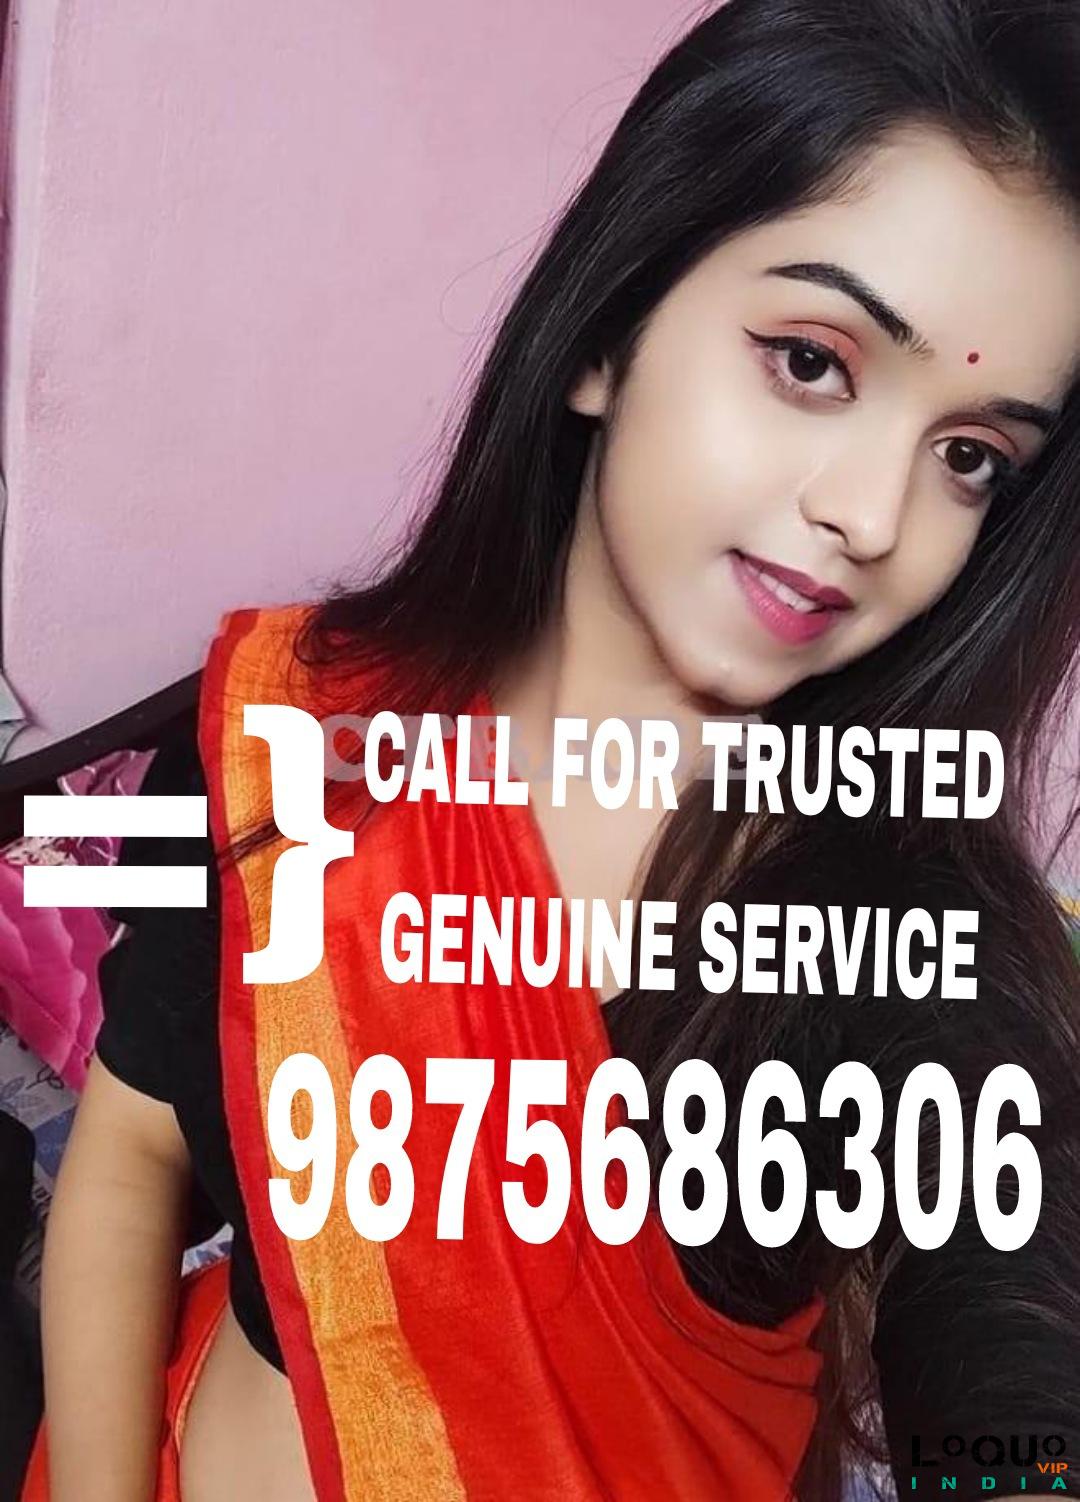 Call Girls Rajasthan: AJMER ❤CALL GIRL 98756*86306 ❤CALL GIRLS IN ESCORT SERVICE❤